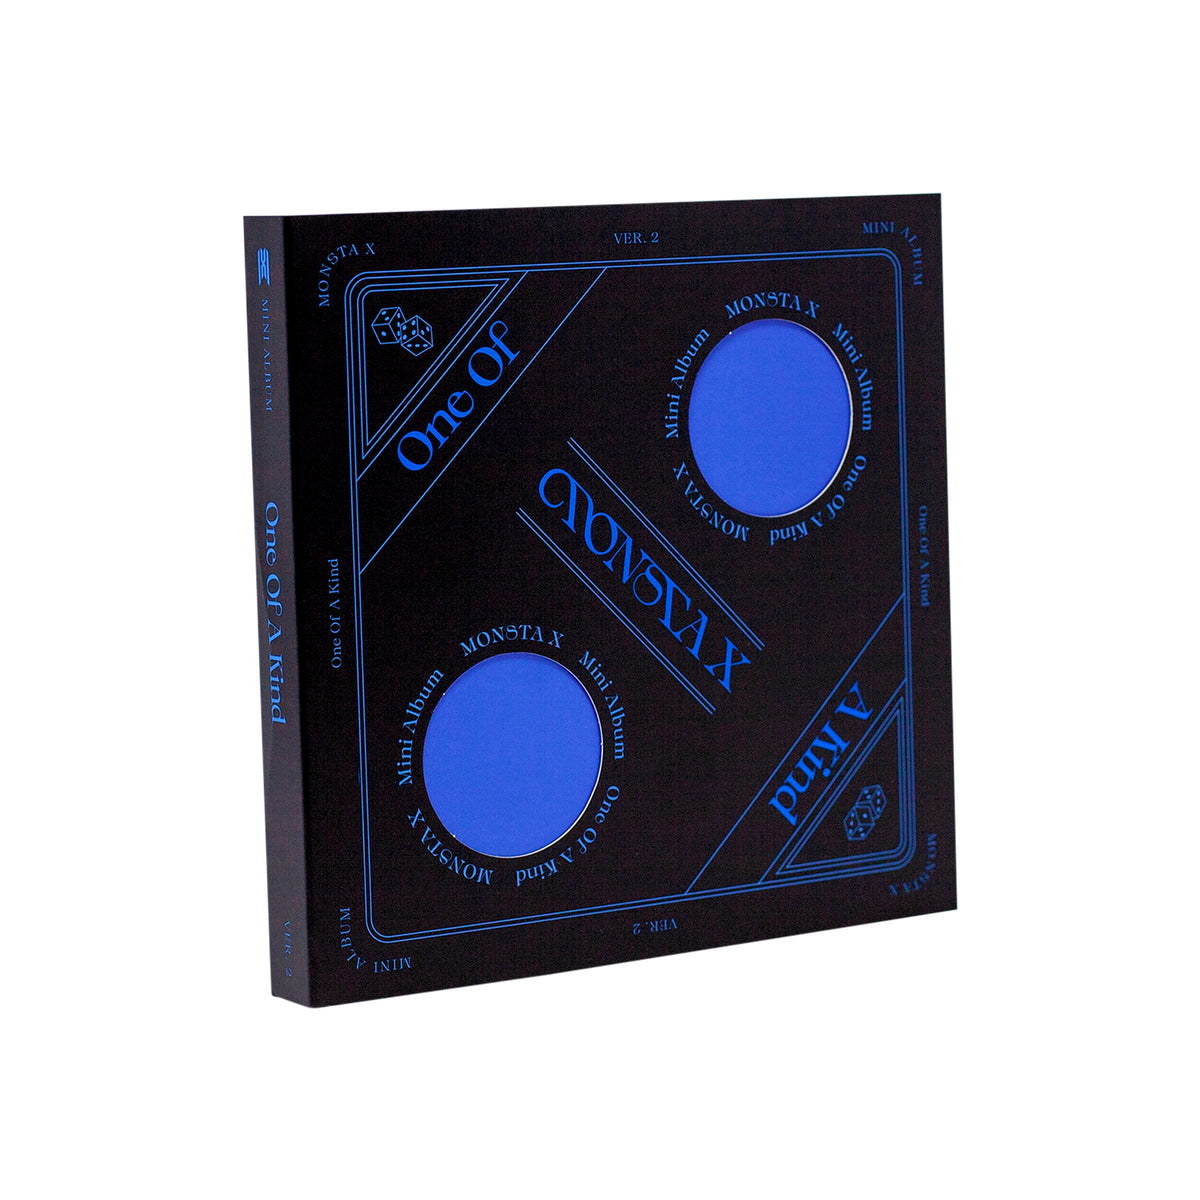 MONSTA X ONE OF A KIND 9th Mini Album - Version 2 main image